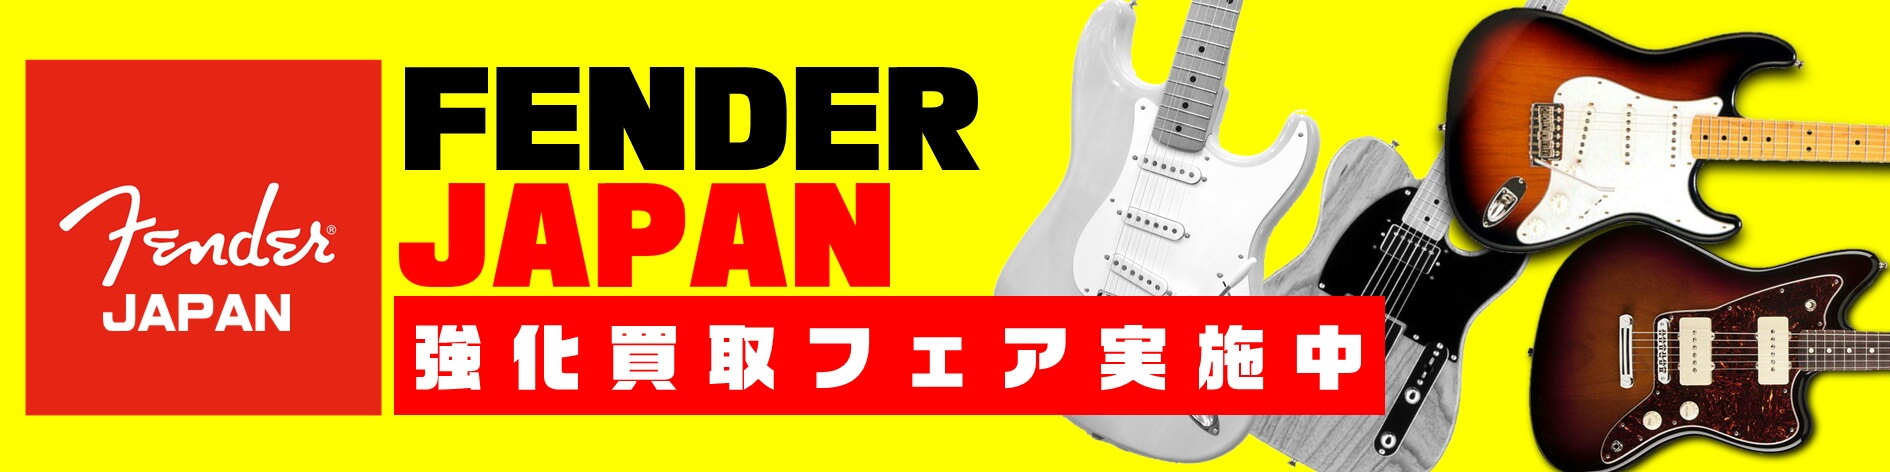 Fender Japan強化買取